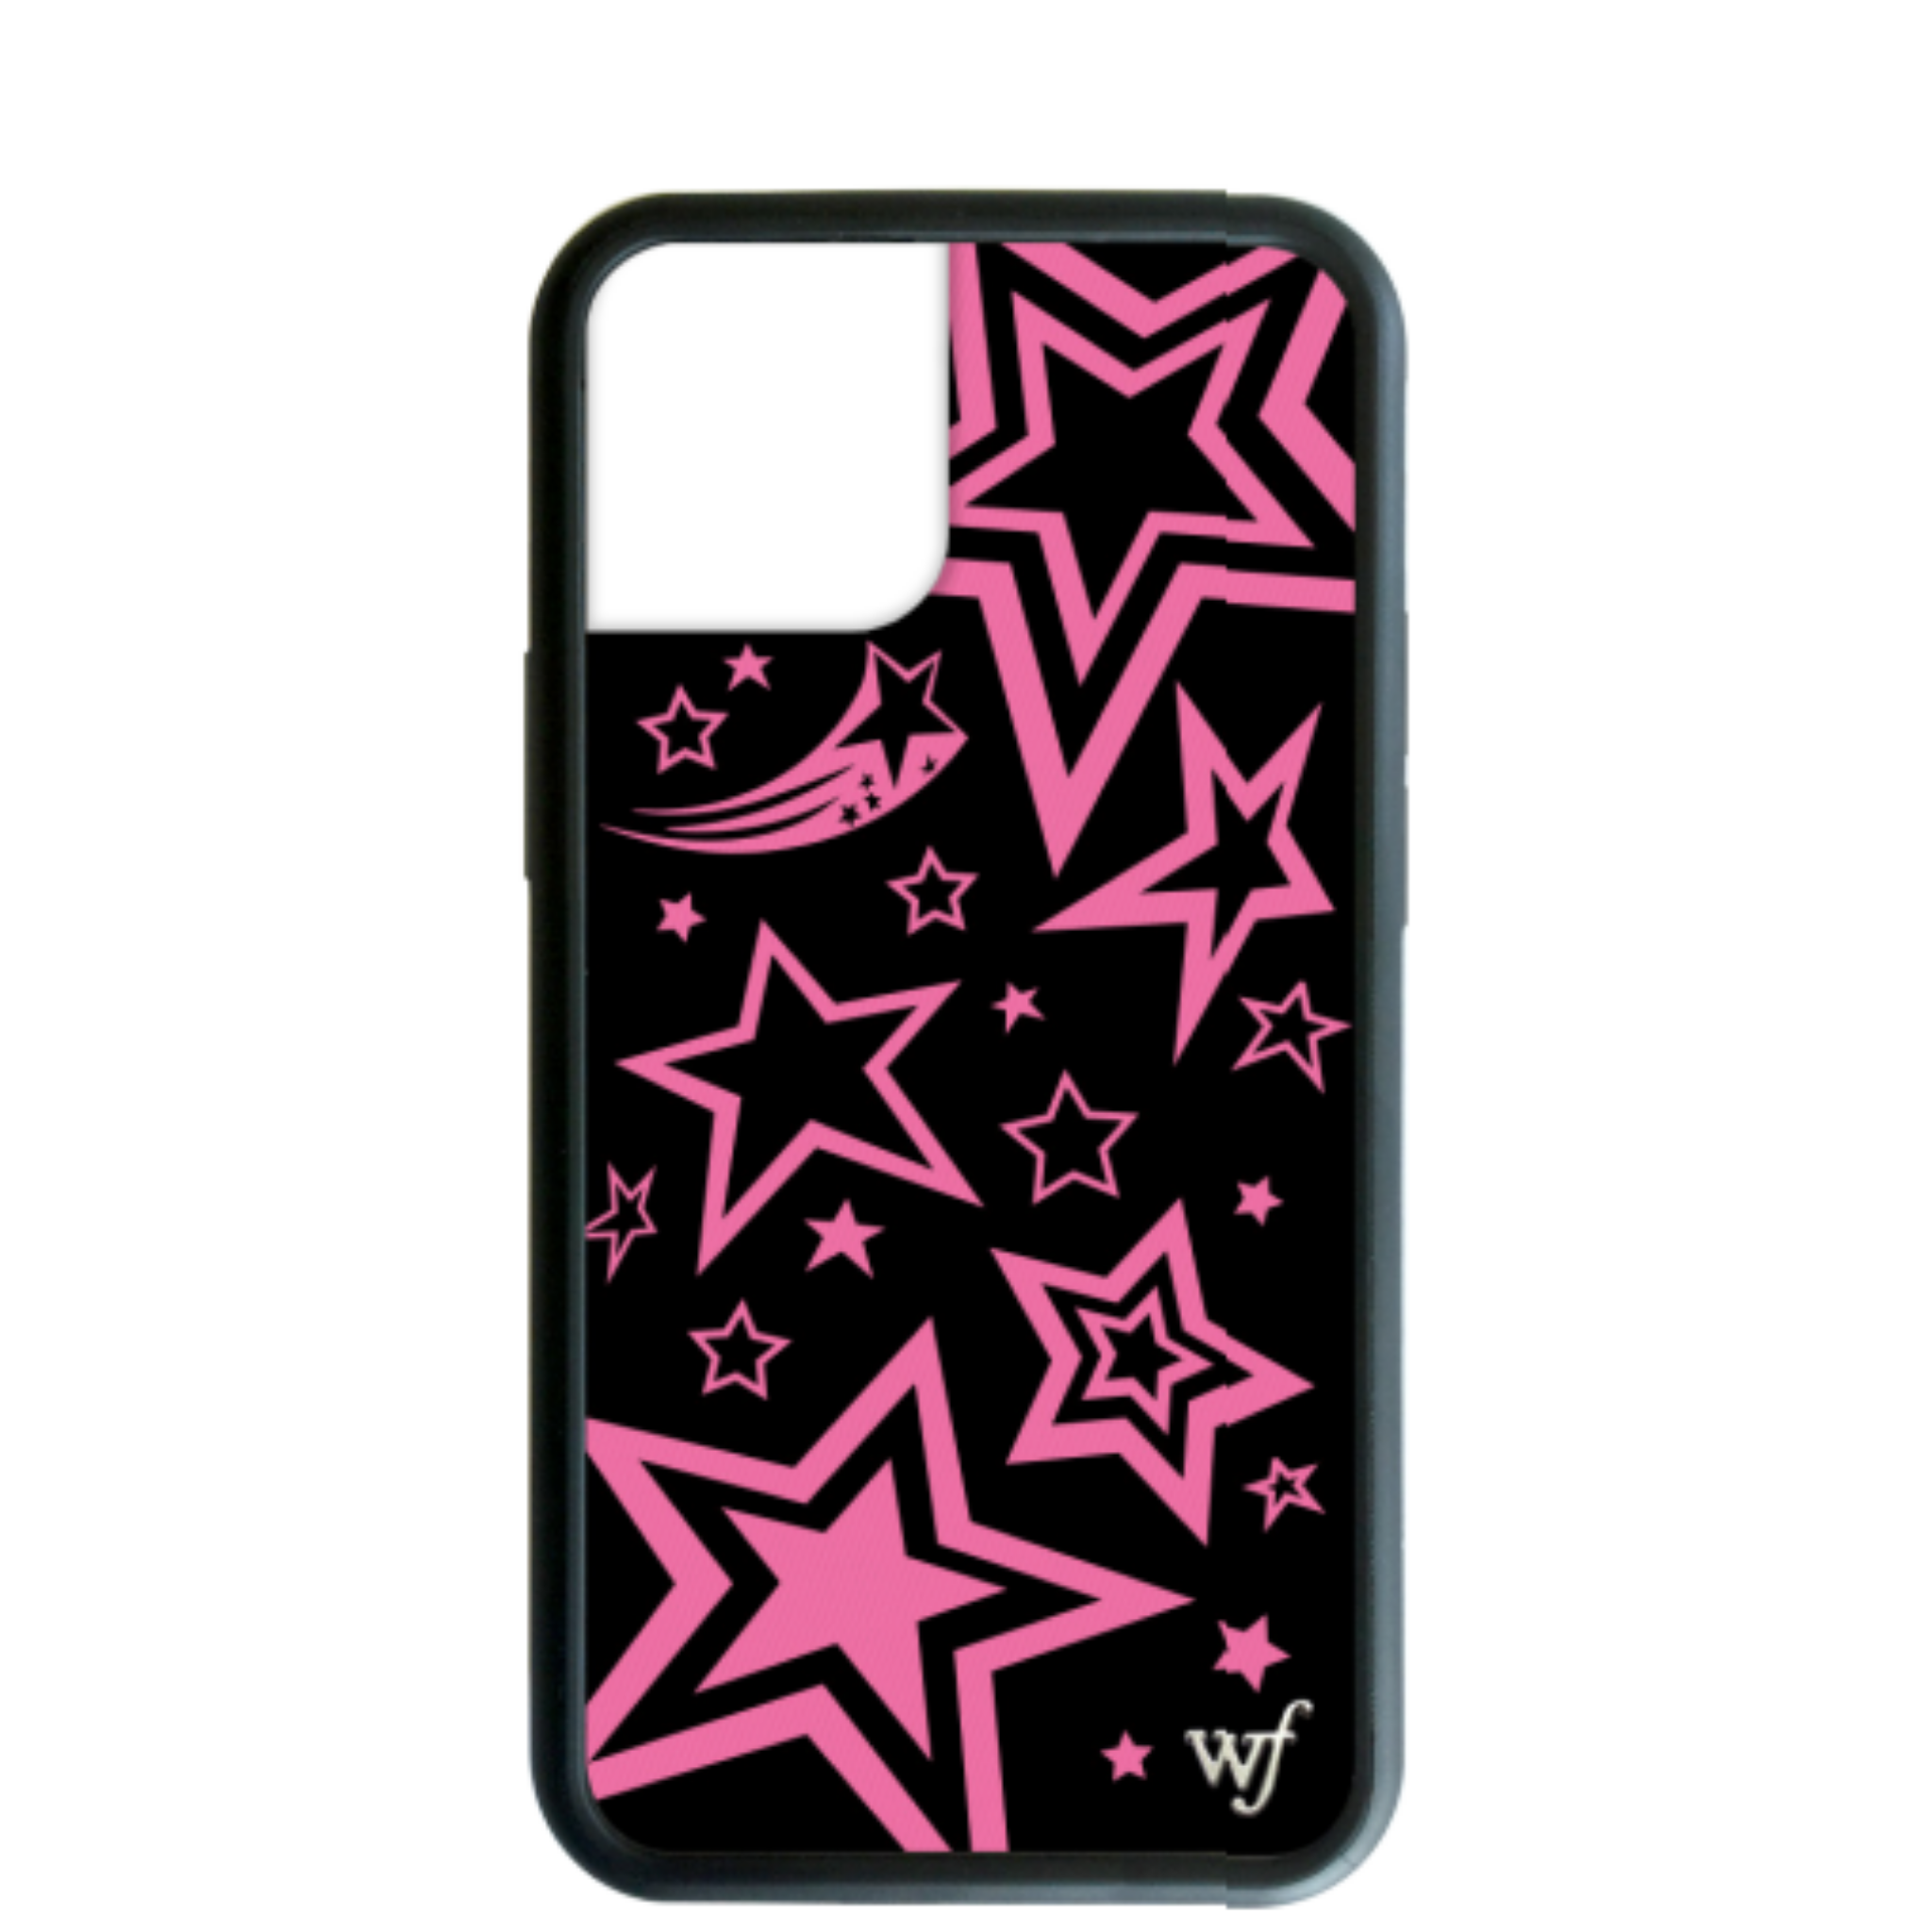 Super Star iPhone 11 Pro Max Case